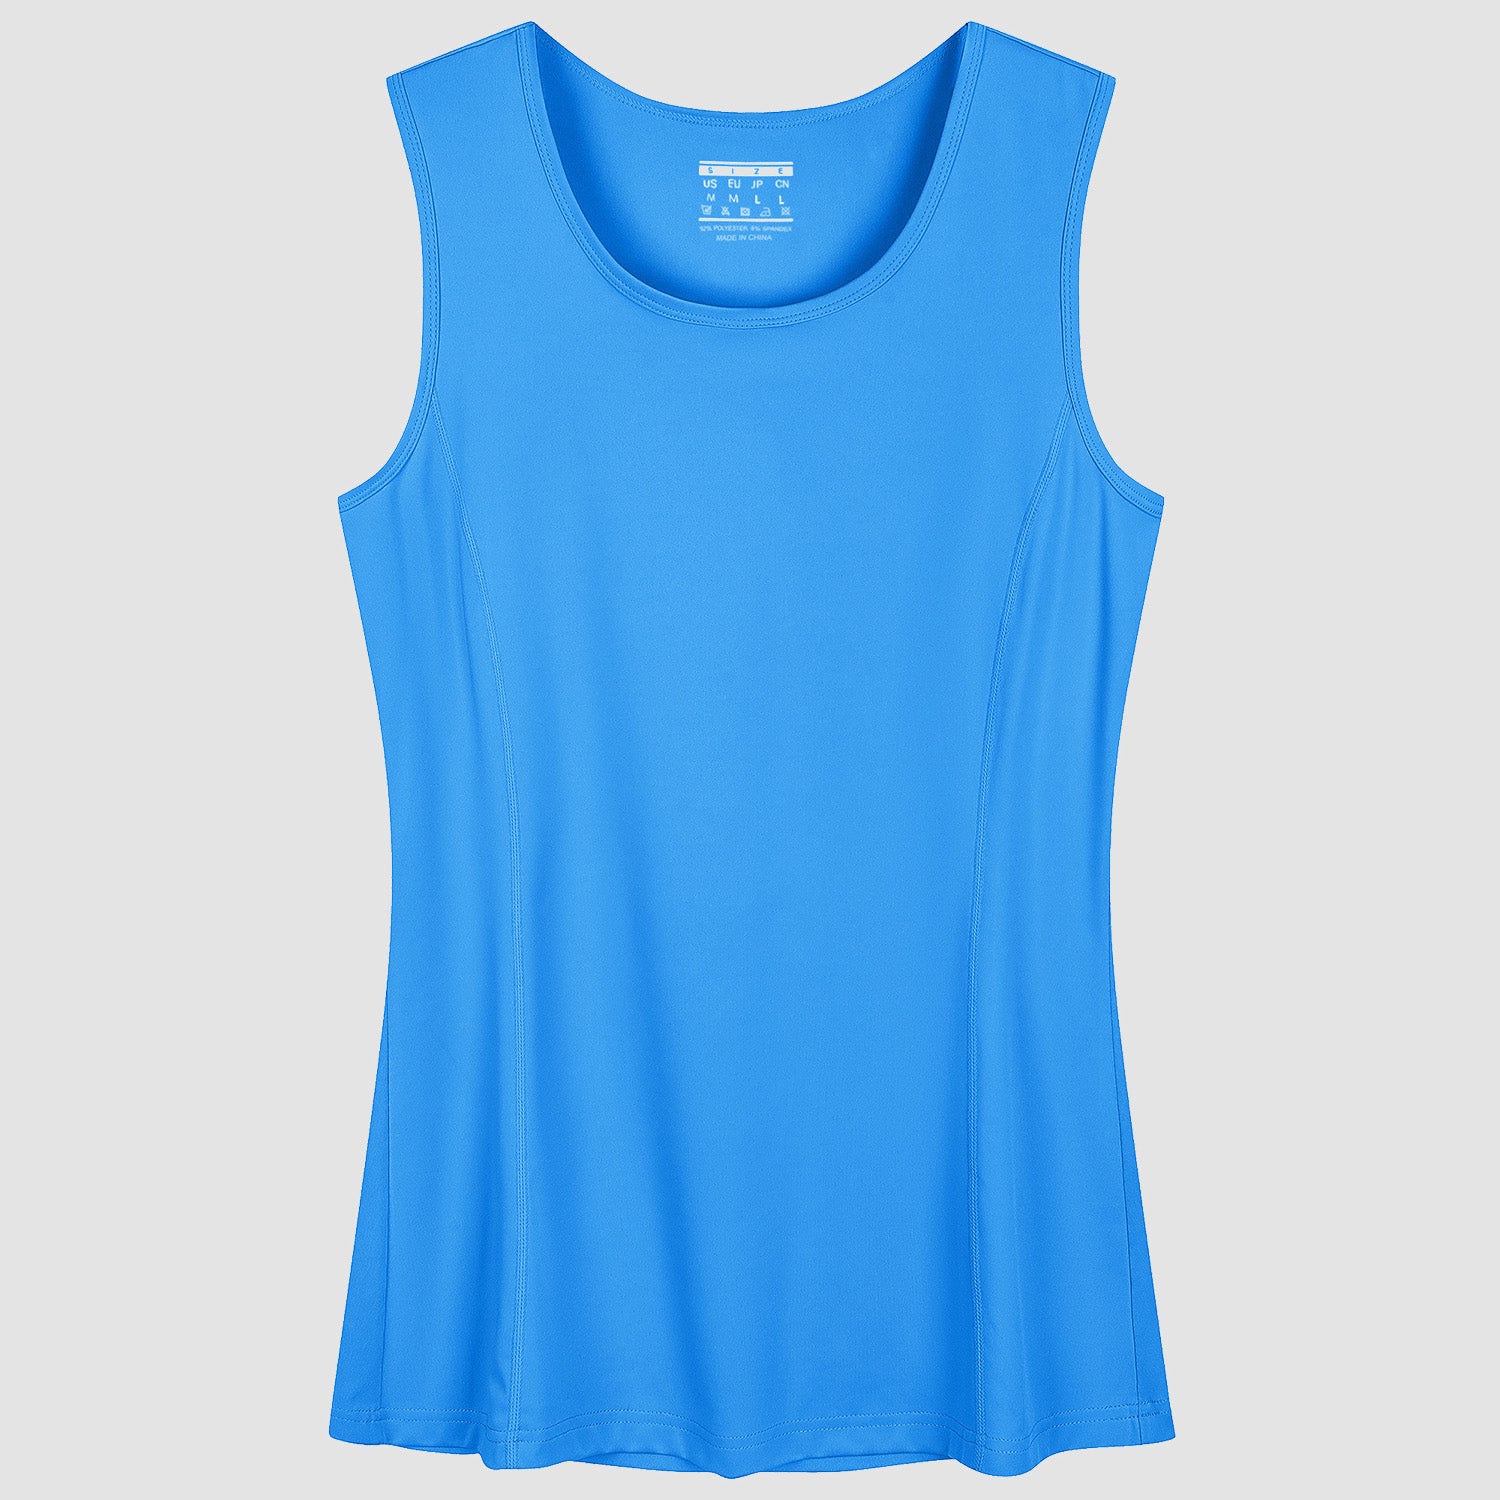 Women's Sleeveless Tank Tops UPF 80+ Sun Protection Quick Dry Wicking Workout Shirts, Azure / S